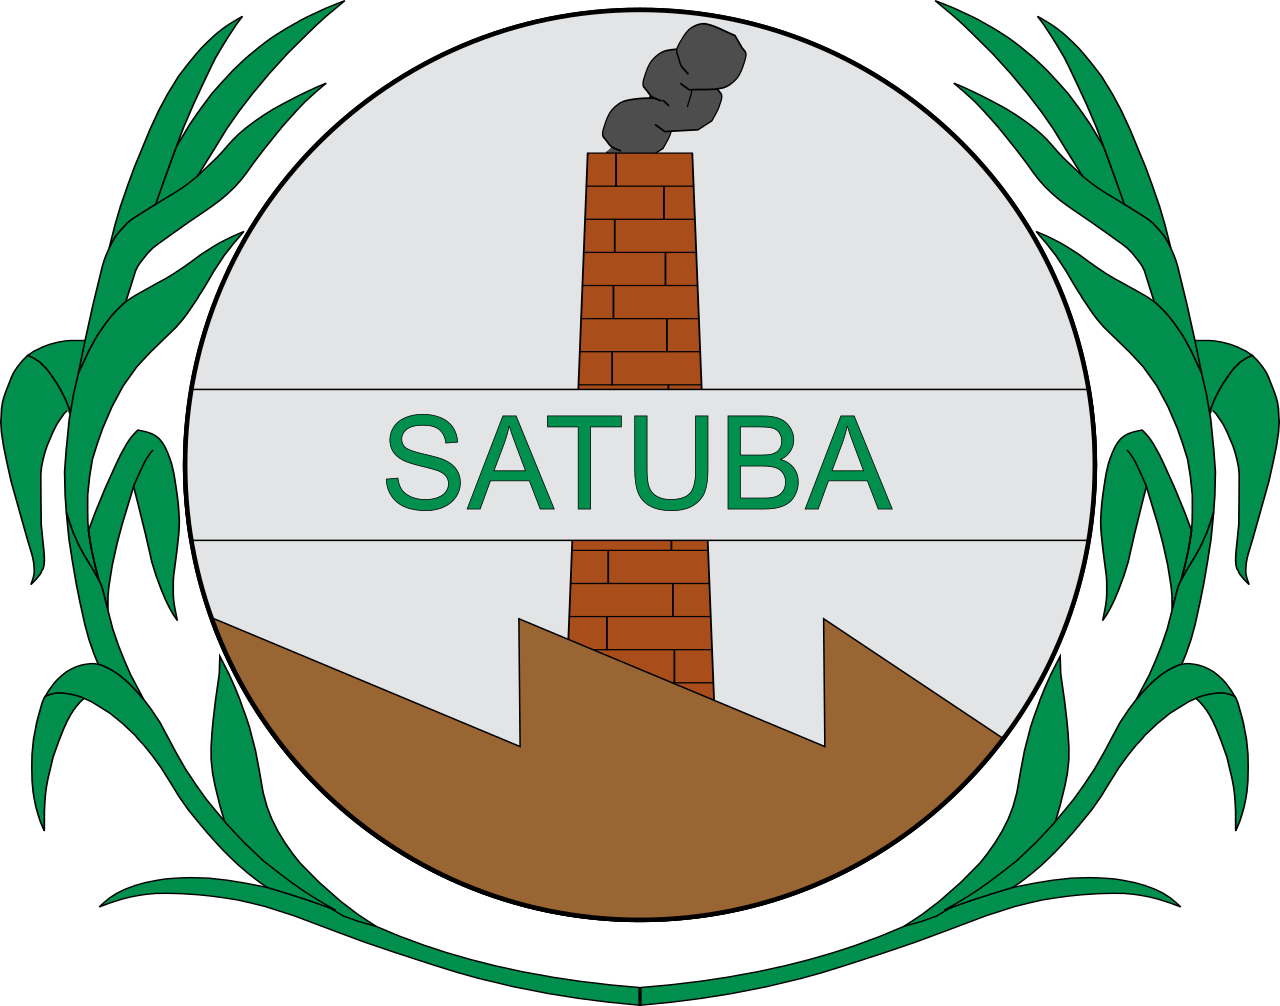 Satuba Of Spanish Wikipedia Arms Flag Coat - Satuba Of Spanish Wikipedia Arms Flag Coat (1280x1006)